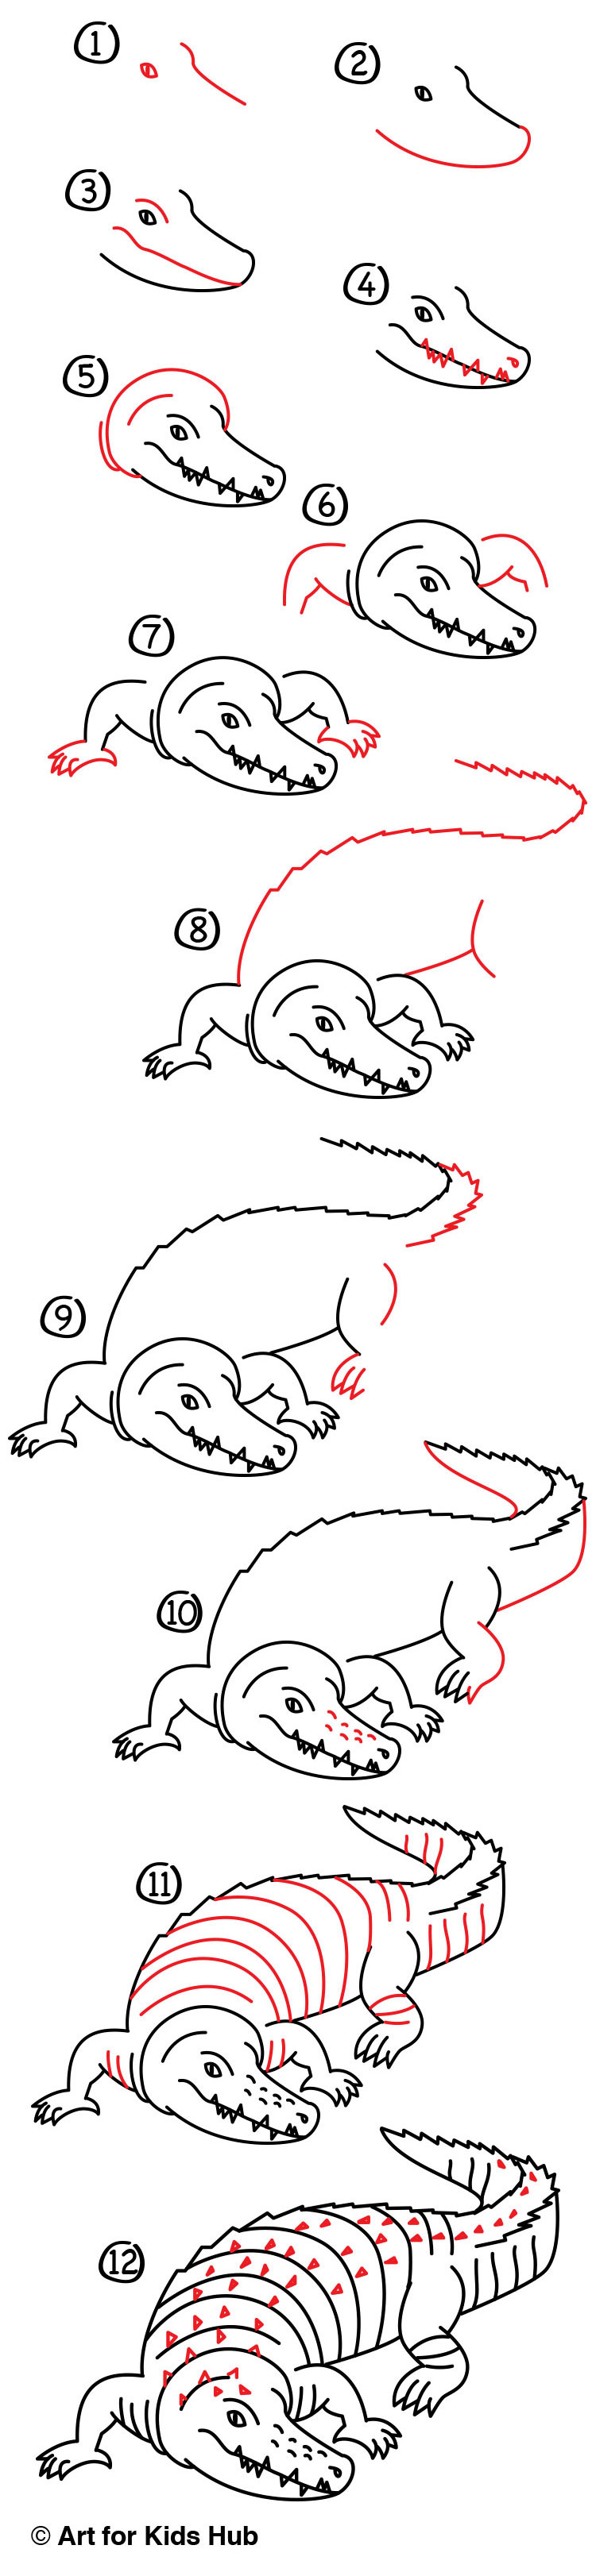 How To Draw A Realistic Crocodile - Art for Kids Hub